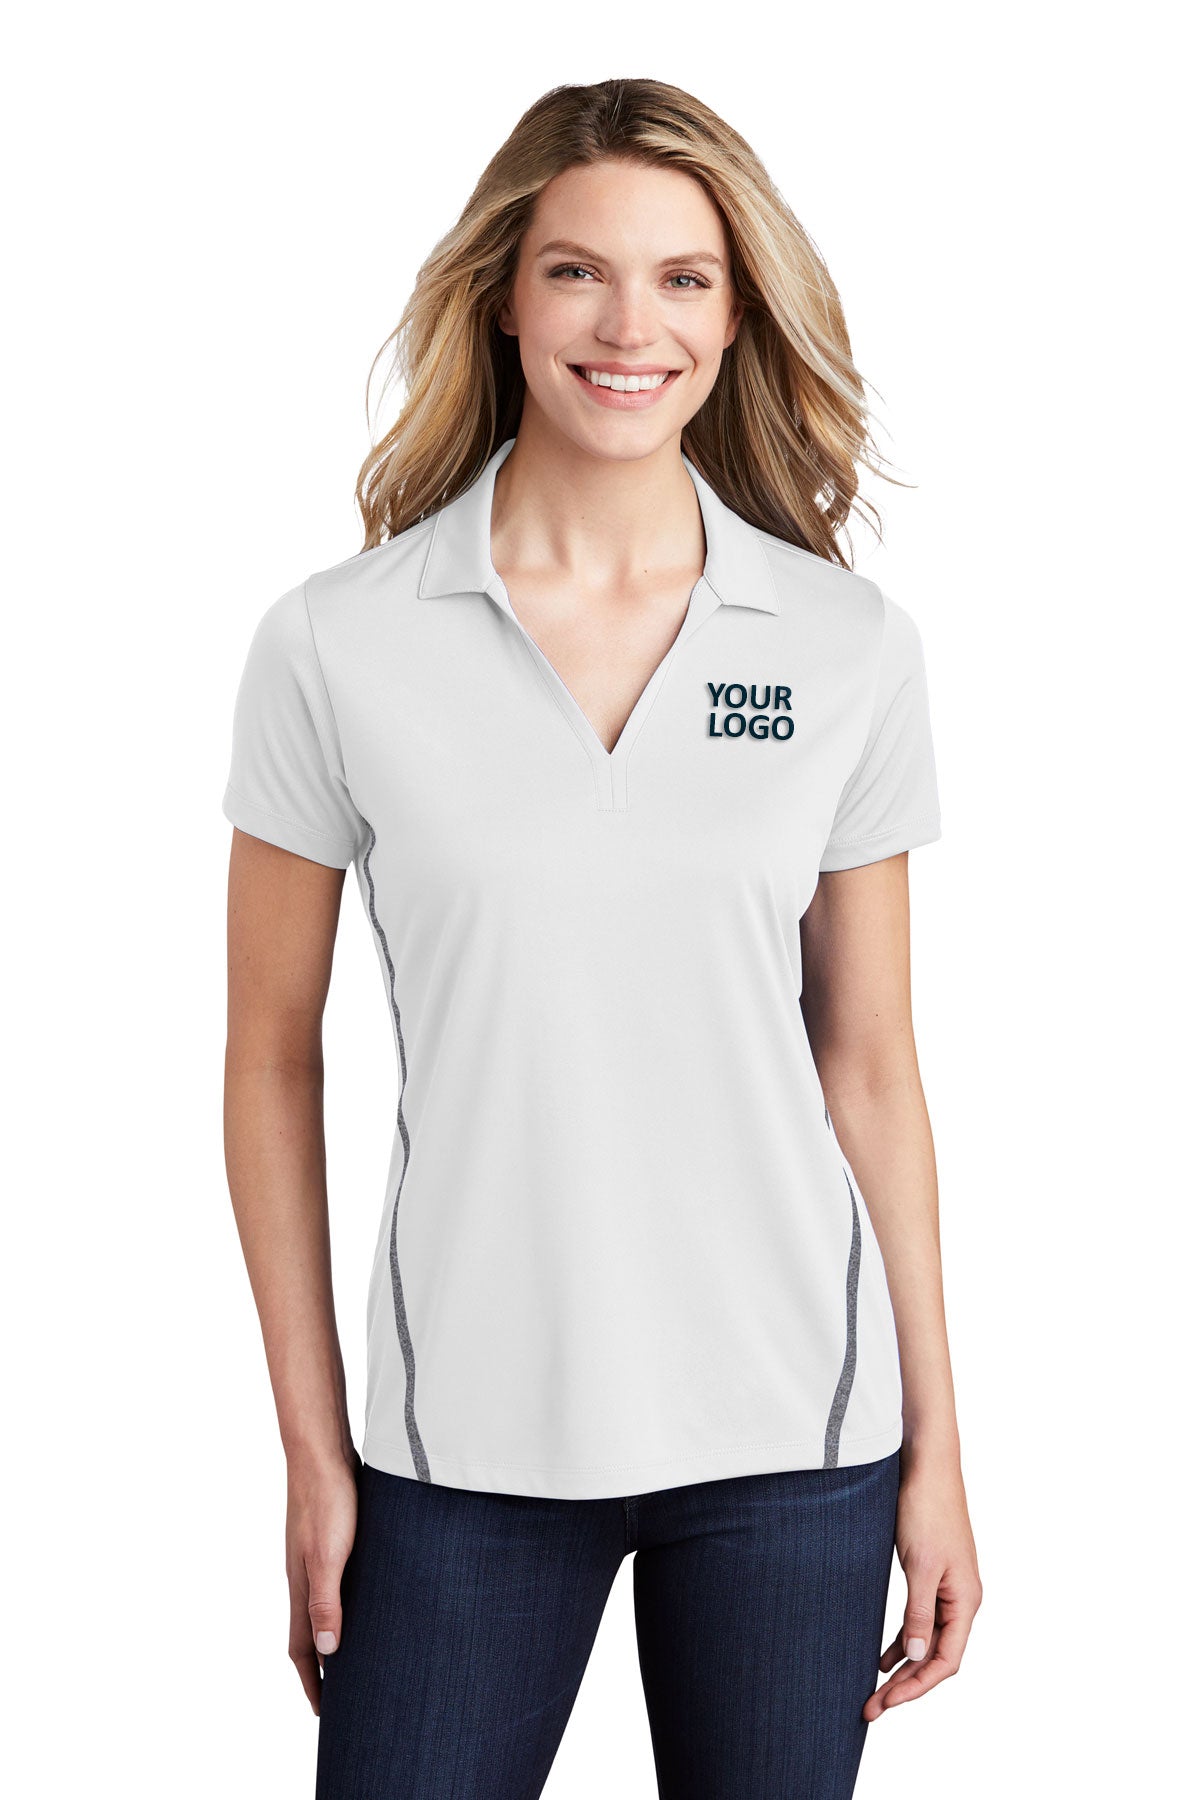 Sport-Tek White/ Heather Grey LST620 custom dry fit polo shirts